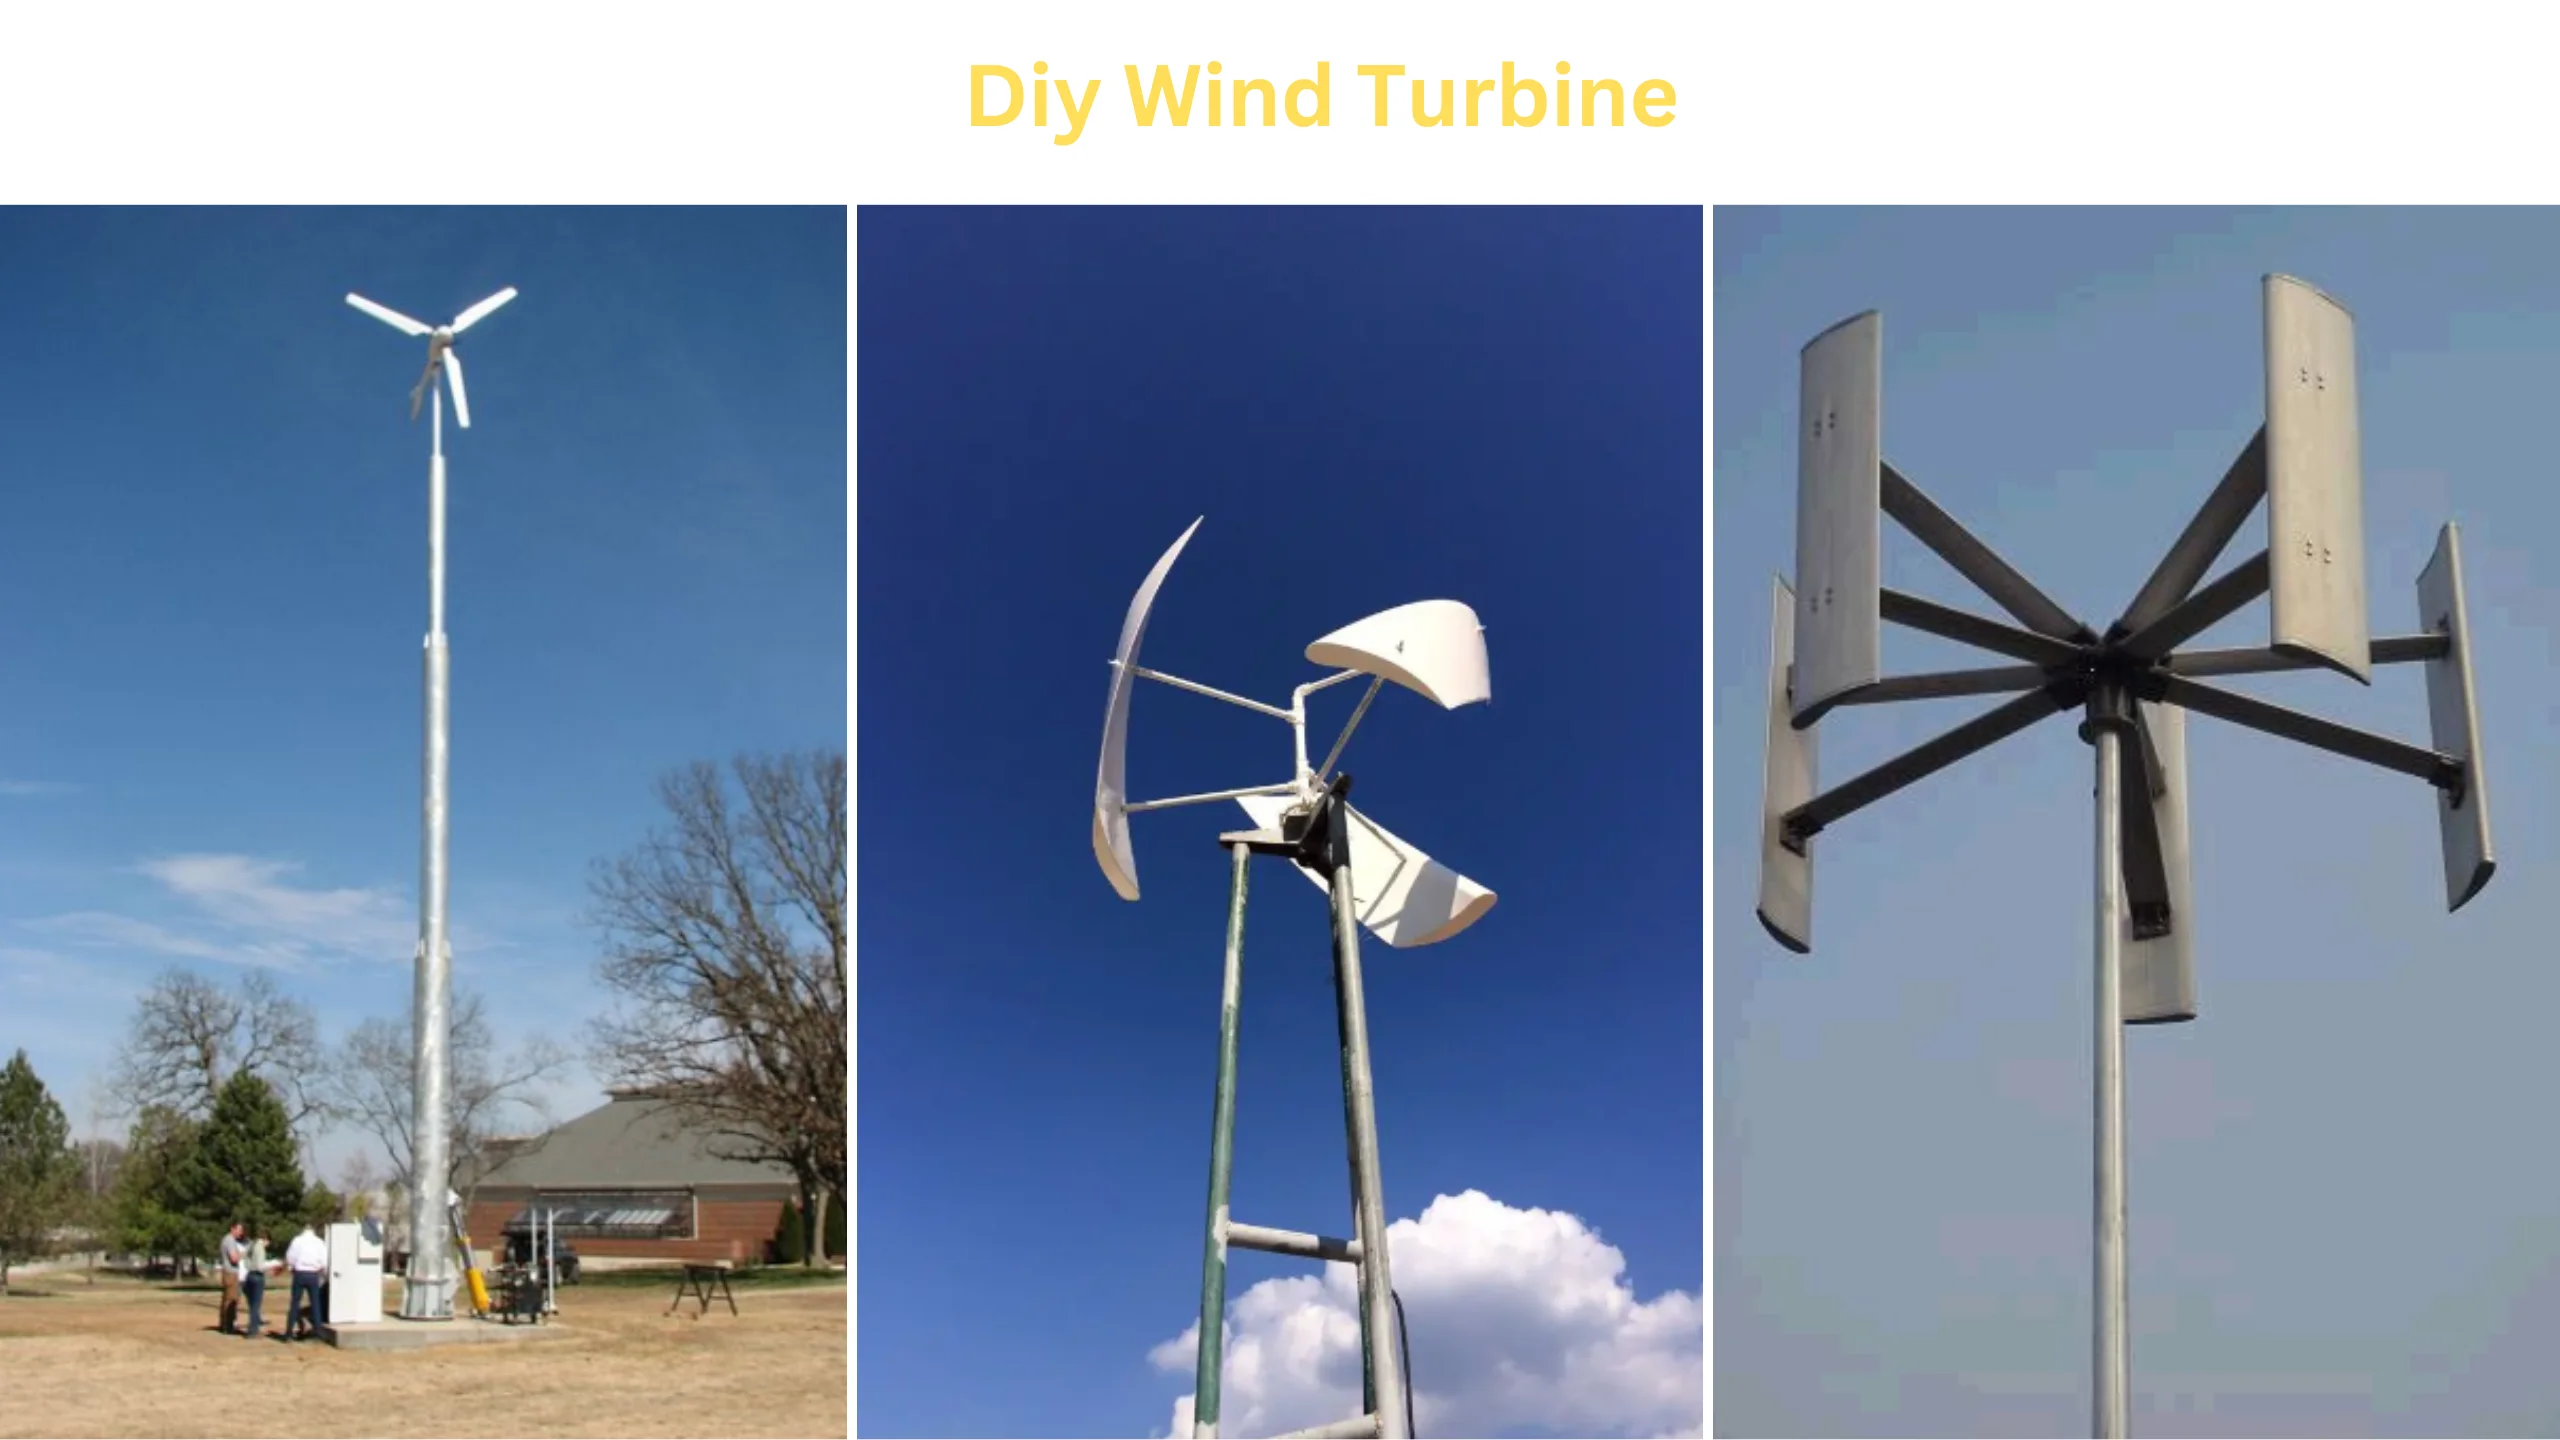 Diy wind turbine 1